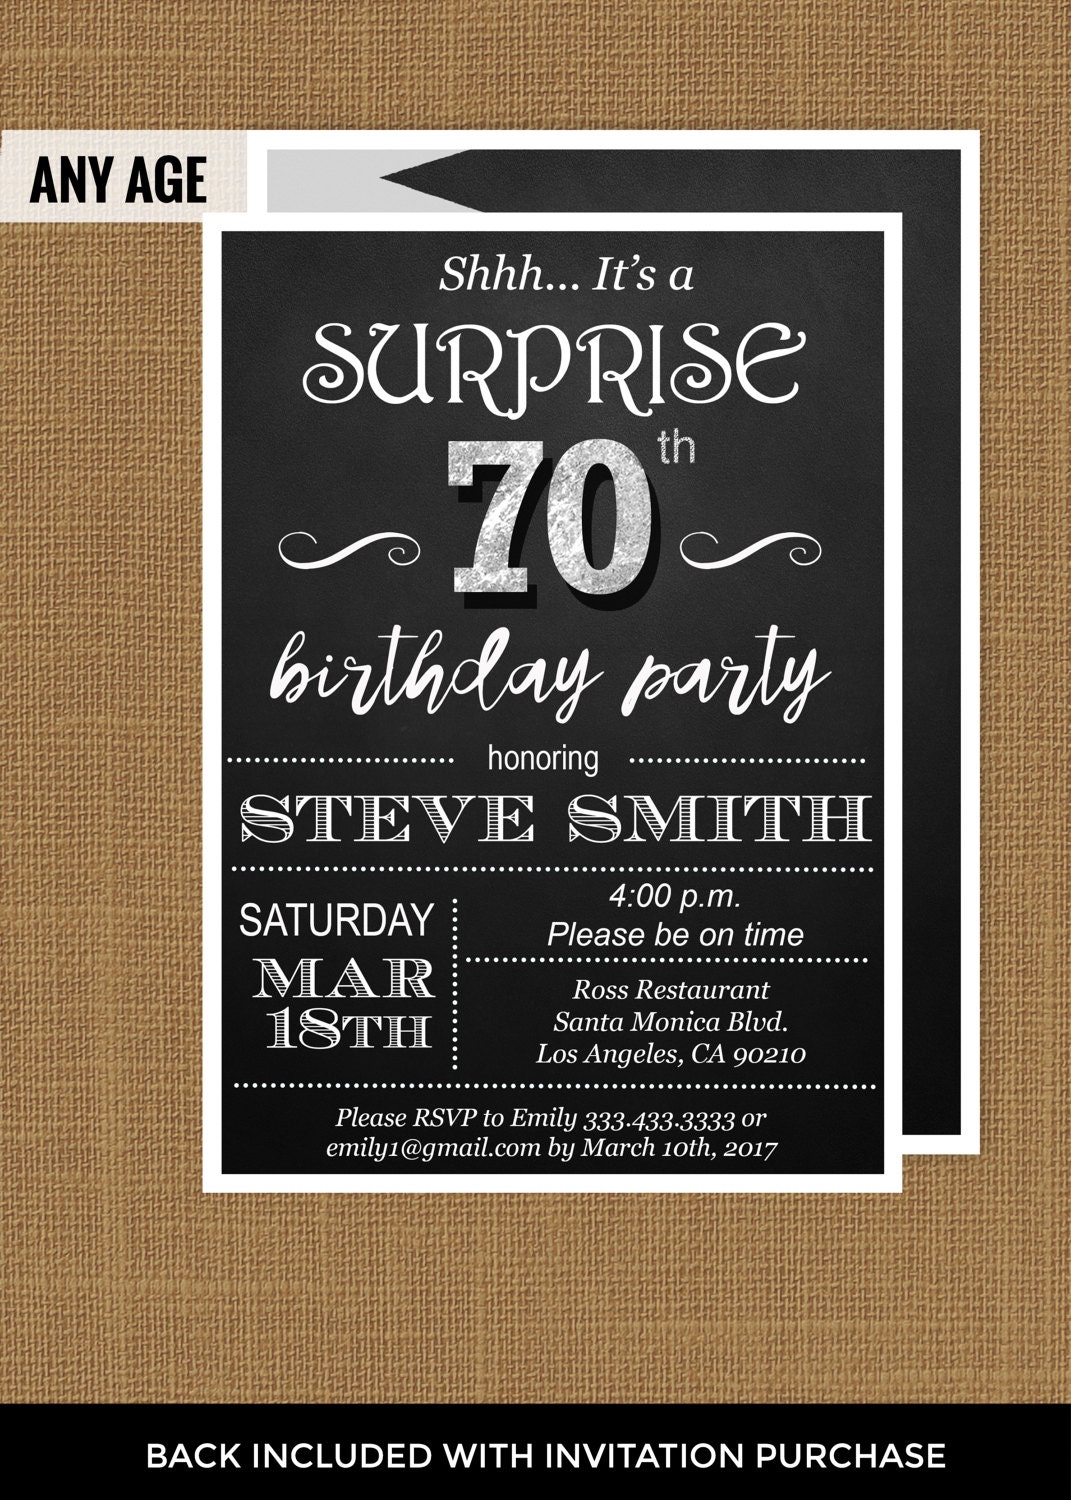 Surprise 70 birthday party invitations by DIYPartyInvitation